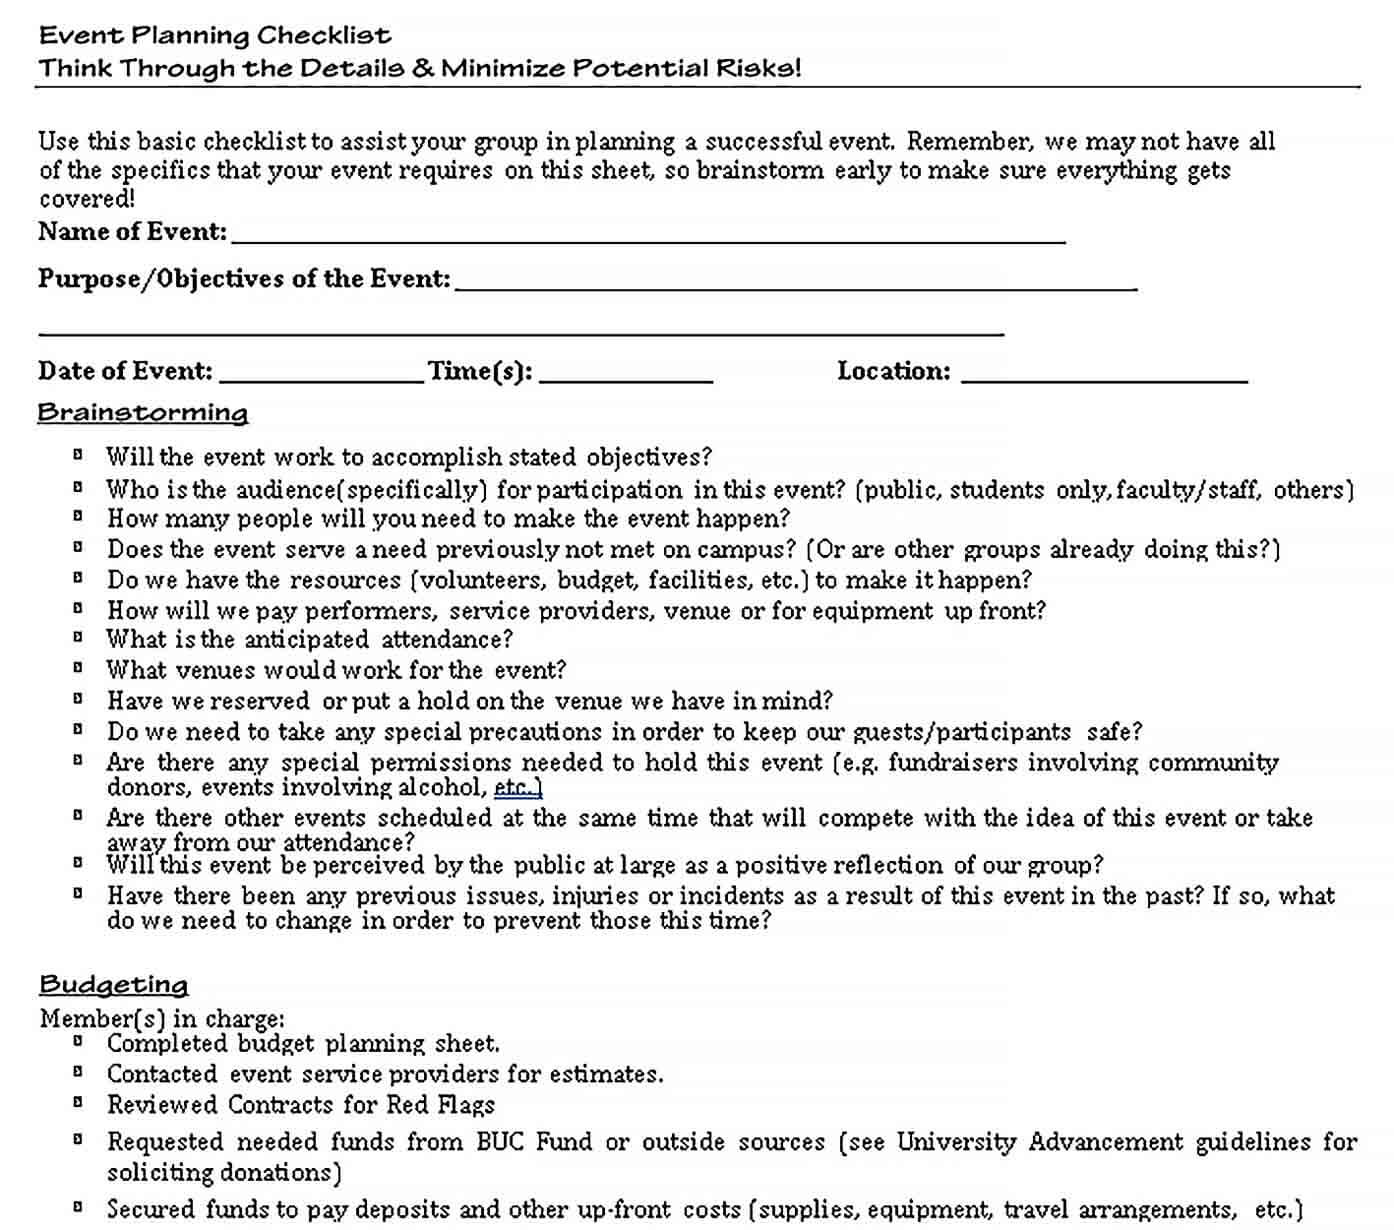 Sample Event Planning Checklist for Student Organization